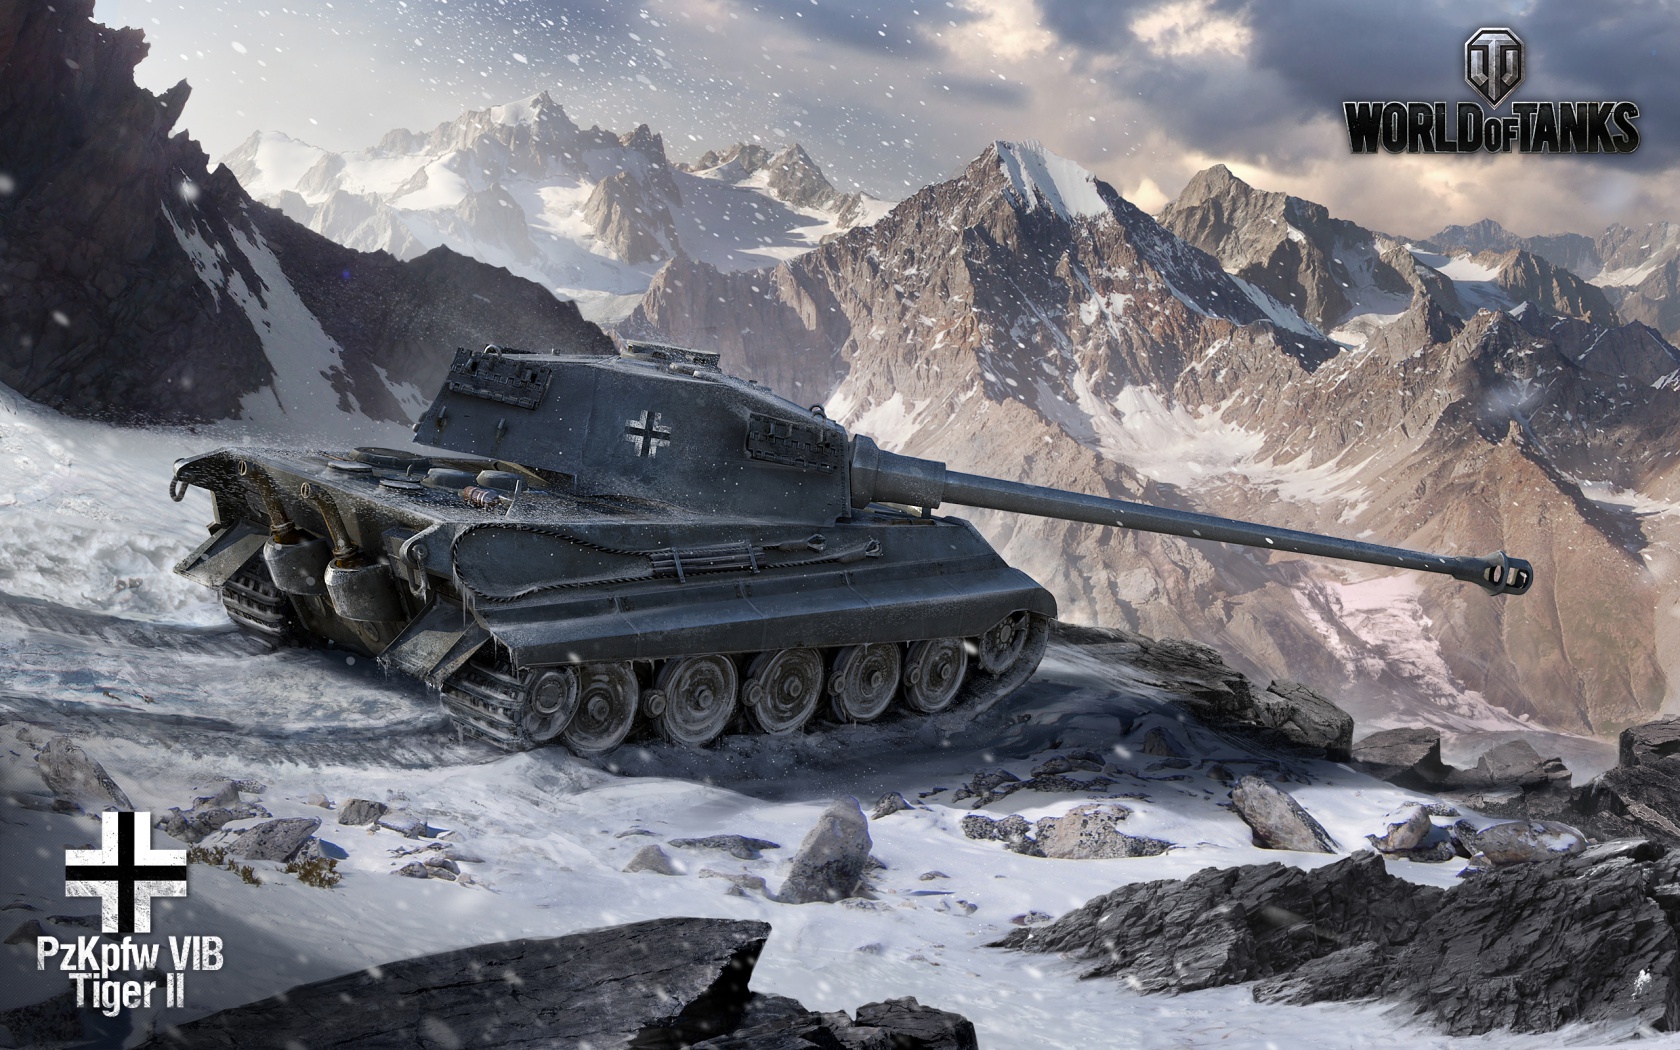 World of Tanks King Tiger wallpaper desktop background in 1680x1050